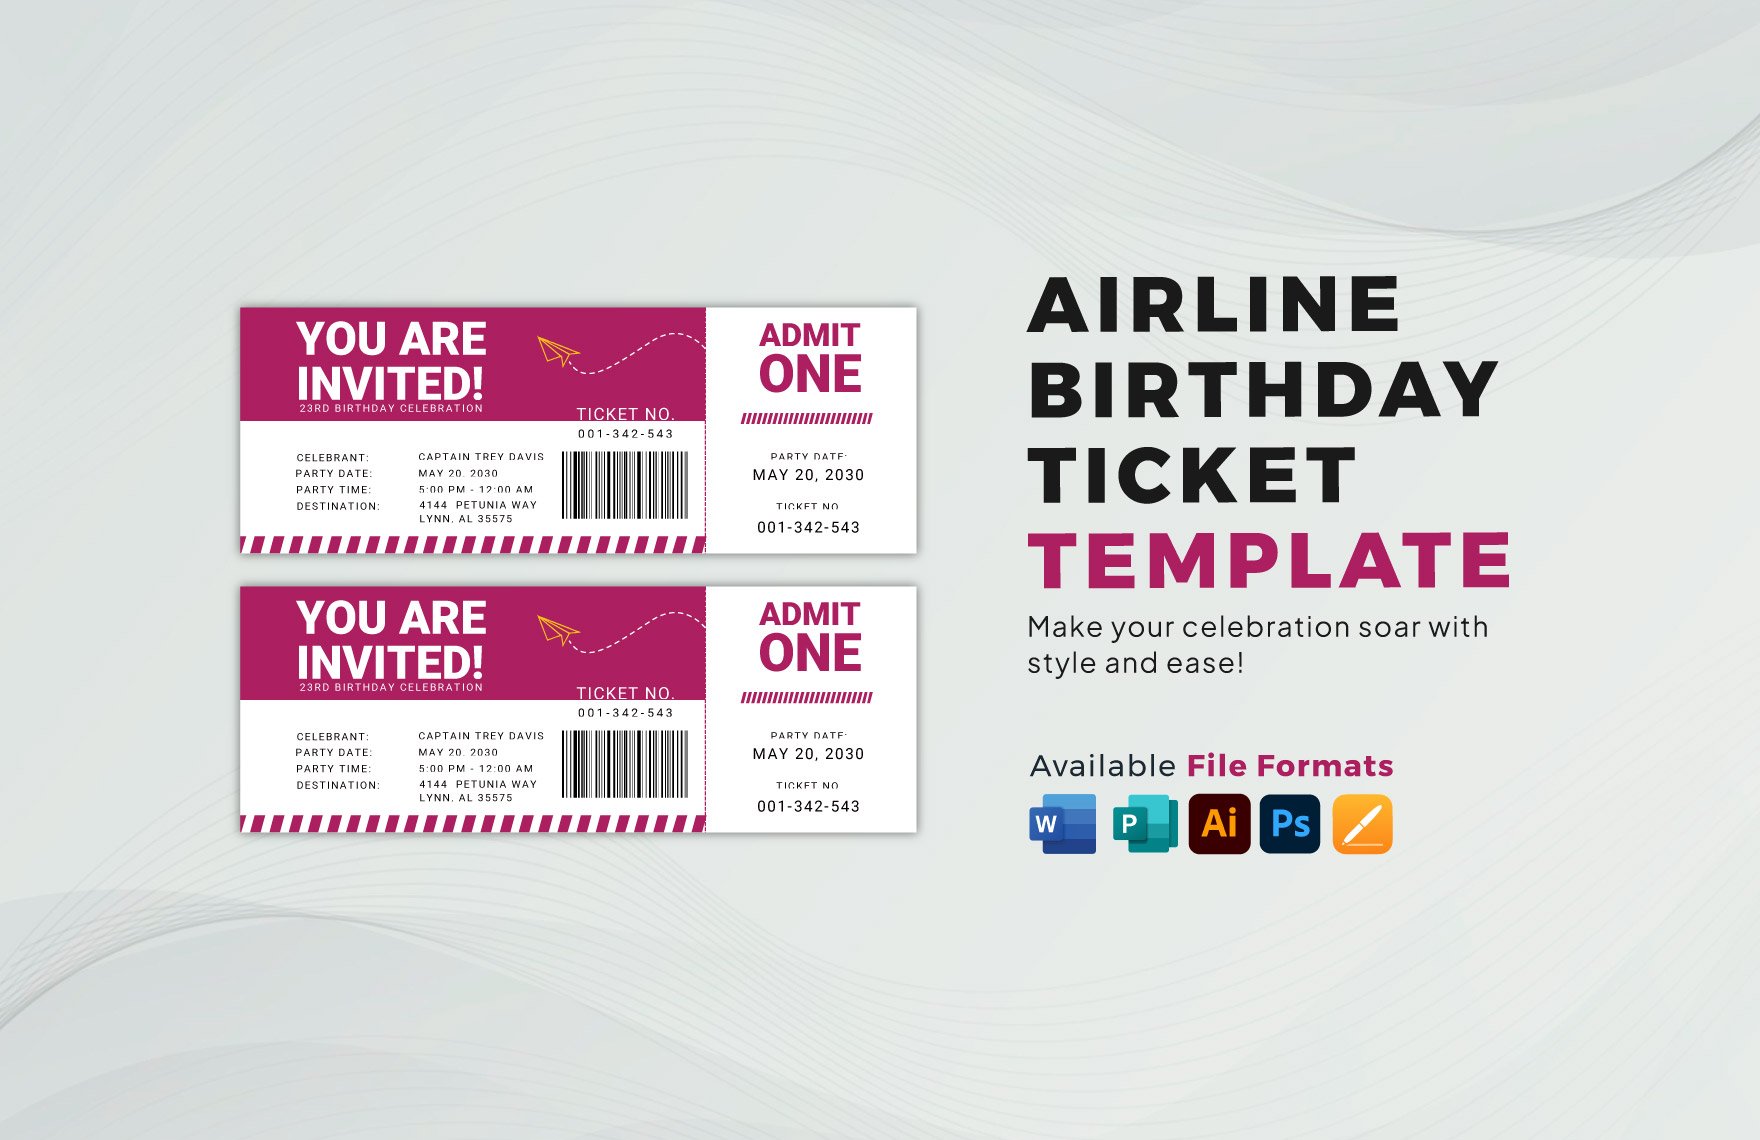 Airline Birthday Ticket Template